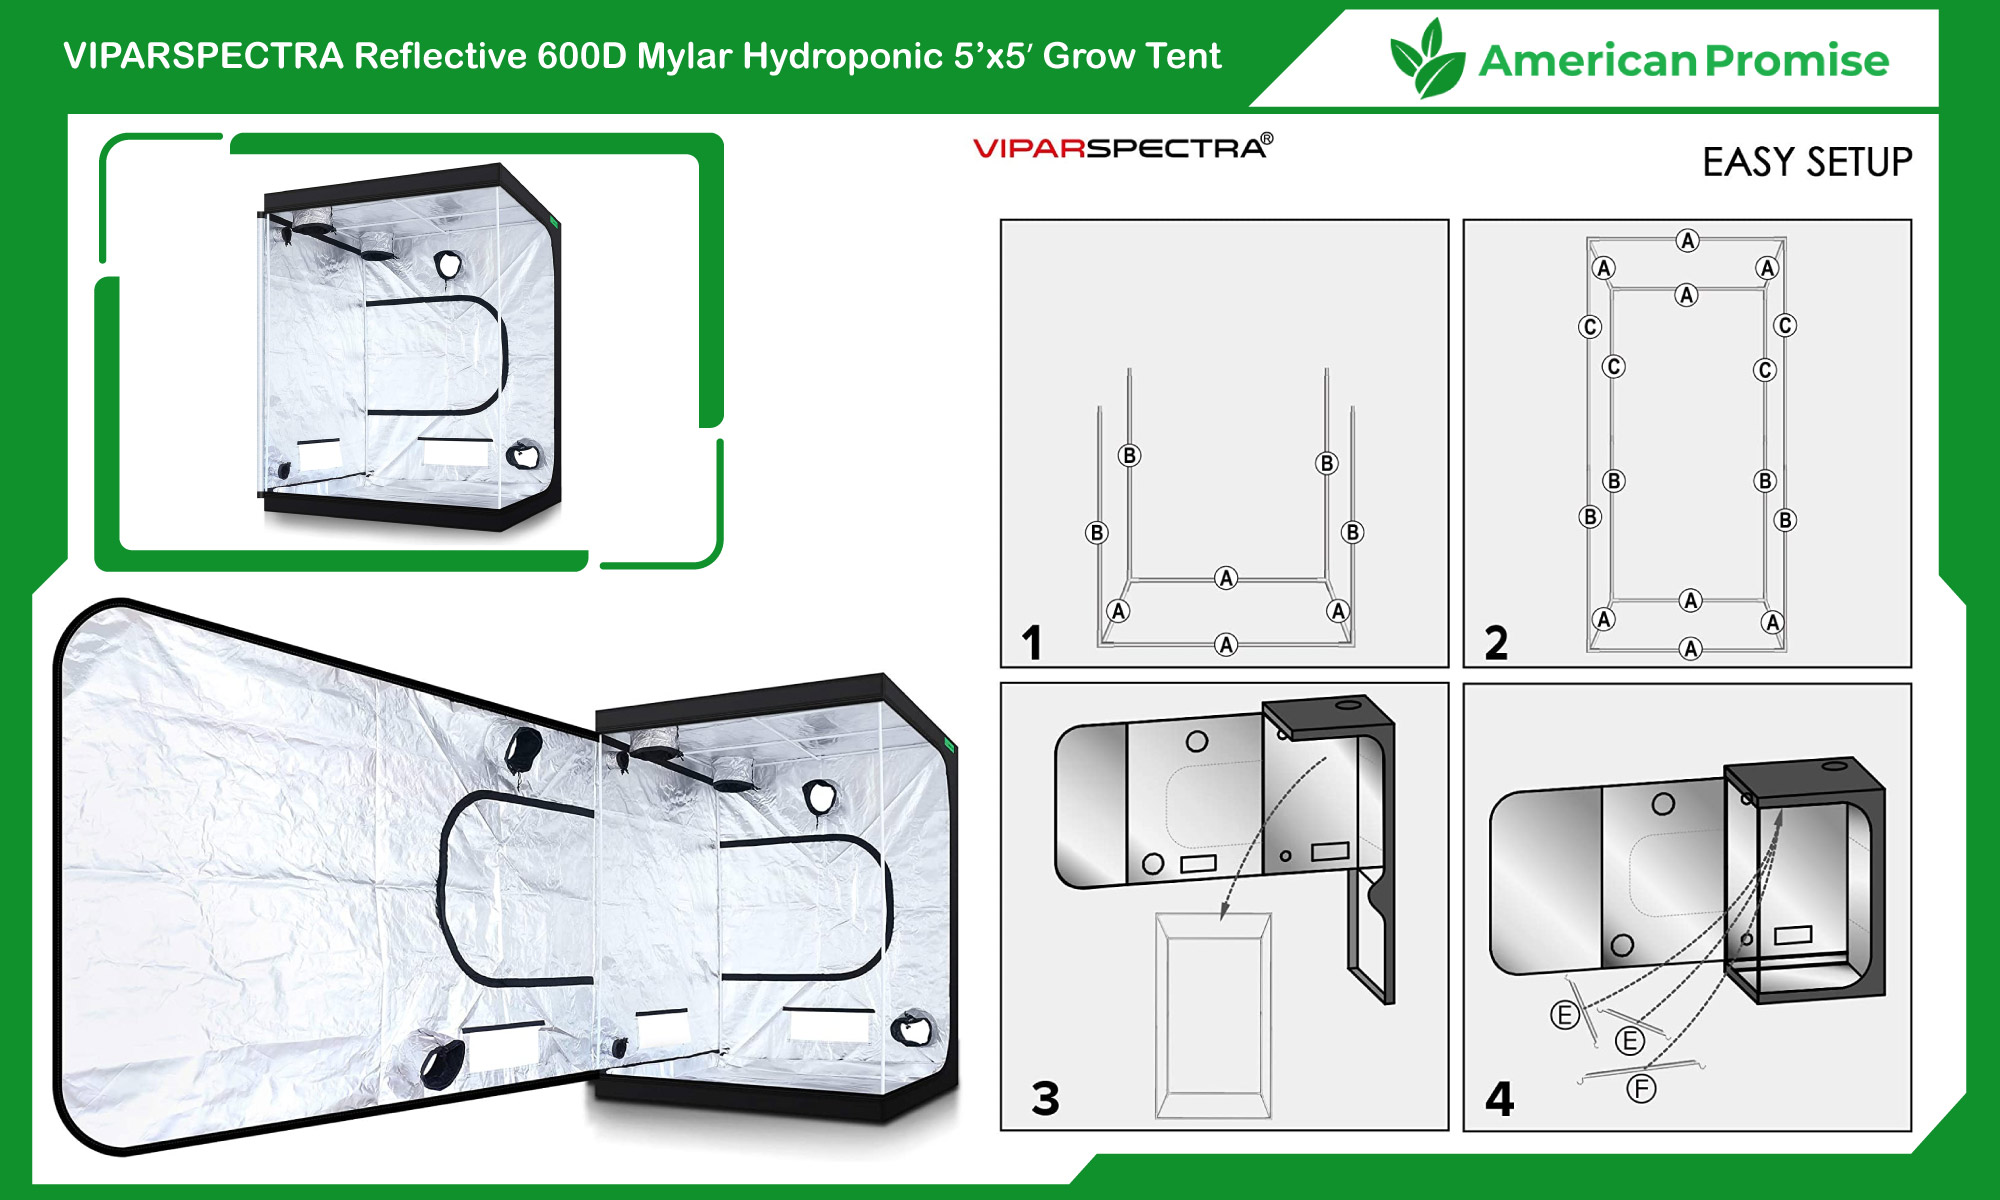 VIPARSPECTRA 60x60x80 Reflective 600D Mylar Hydroponic